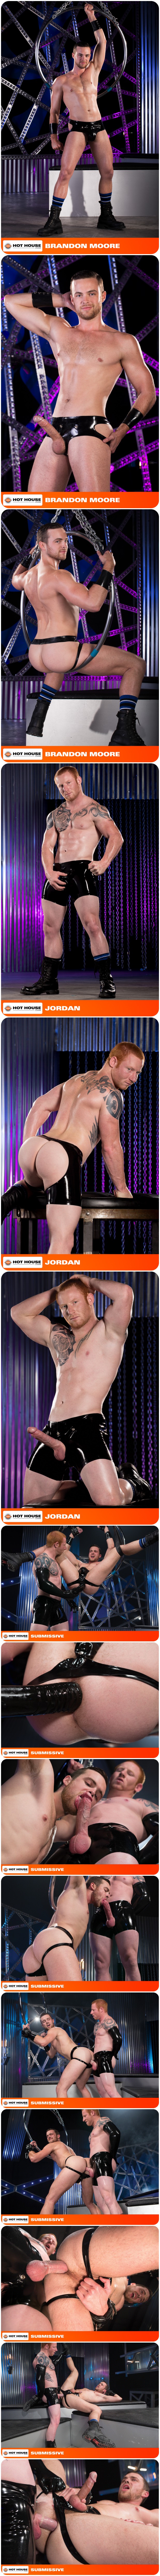 Hot House, Jordan, Brandon Moore